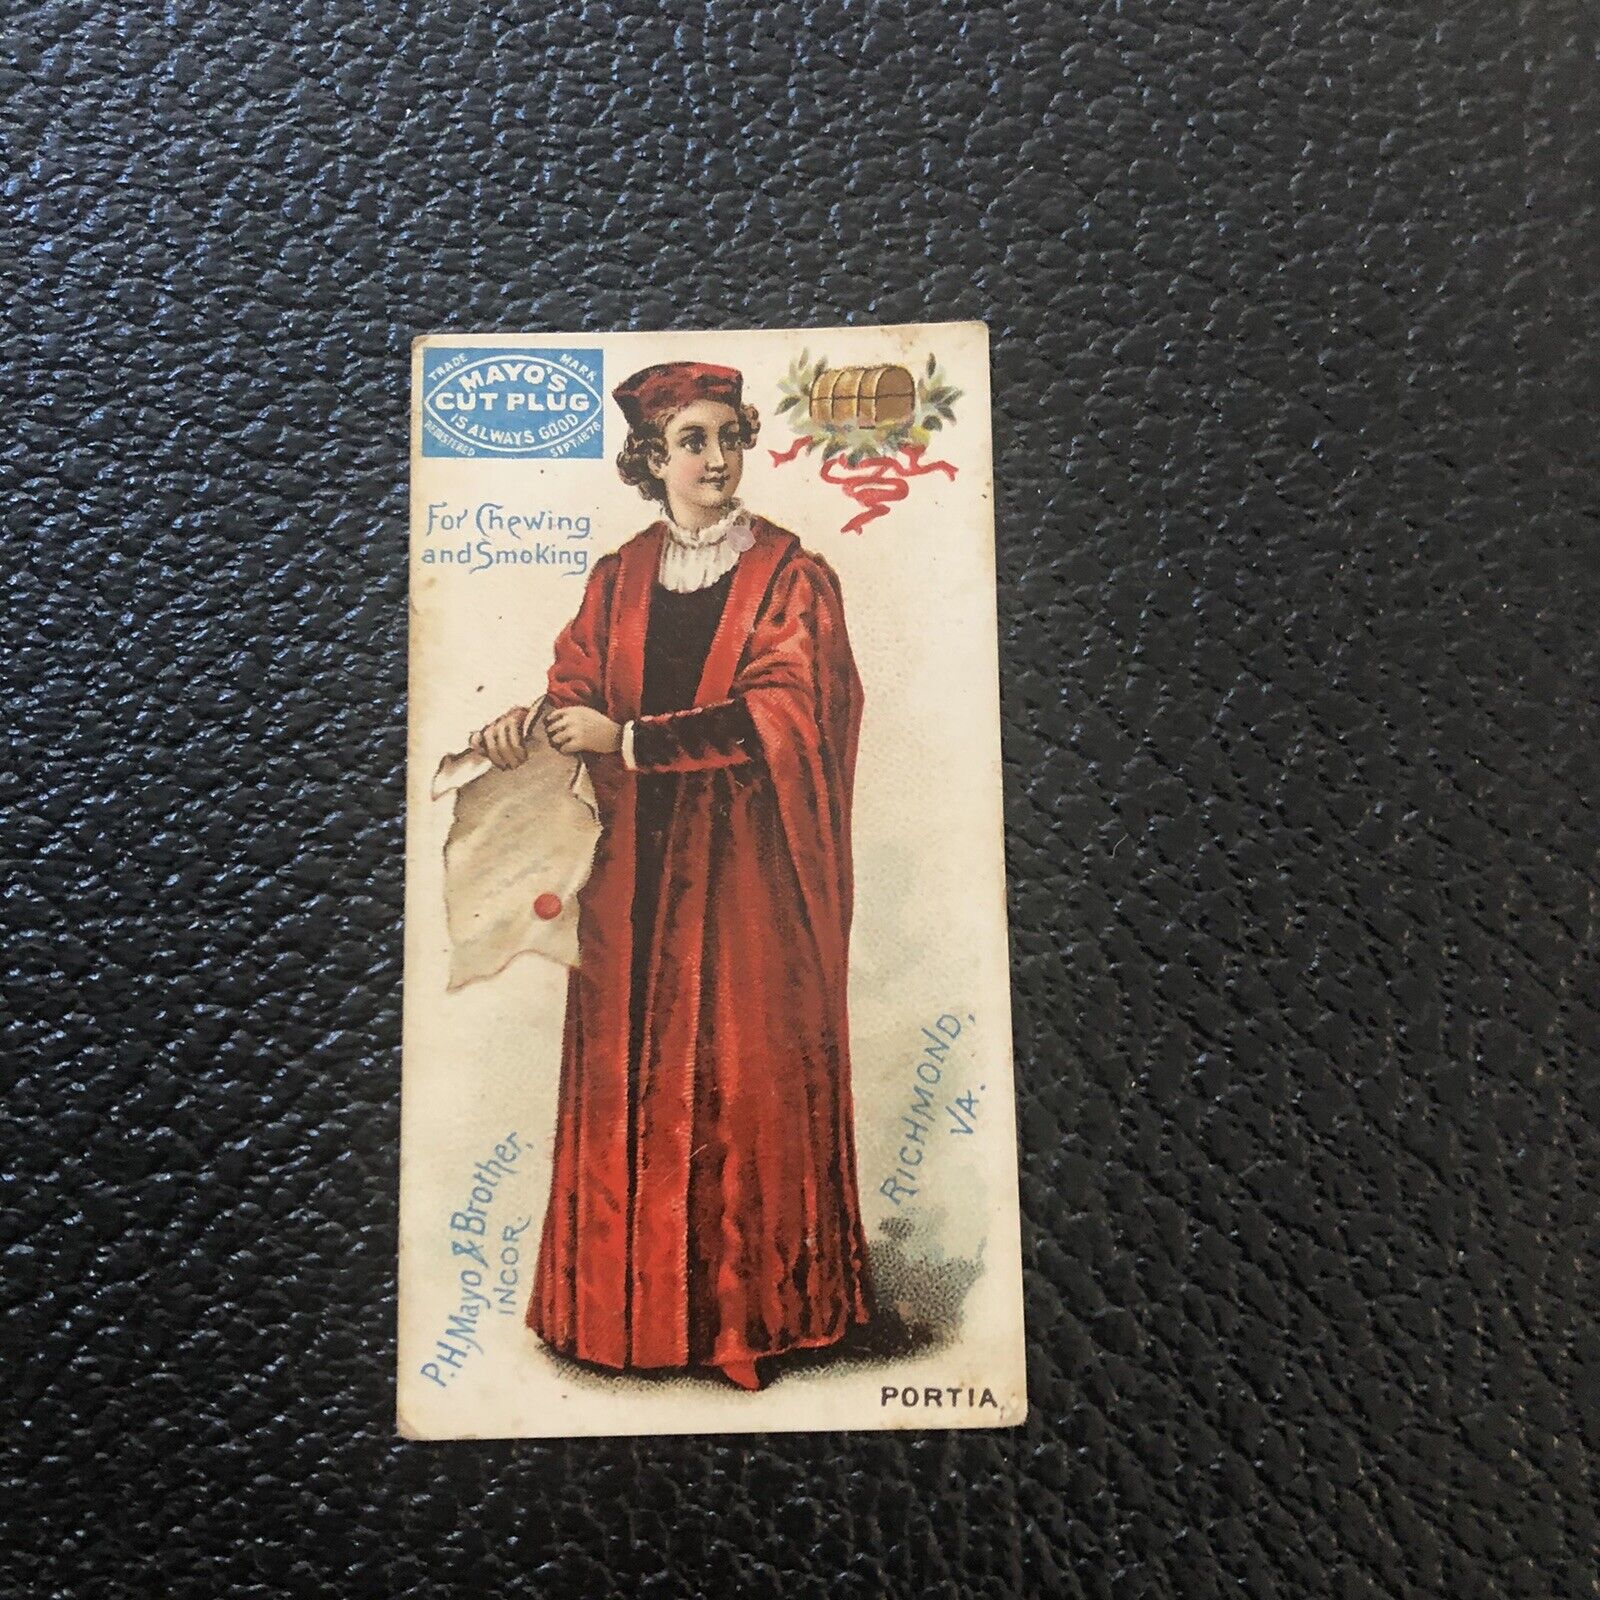 1888 Mayo's Cut Plug Tobacco Card Shakespeare Portia